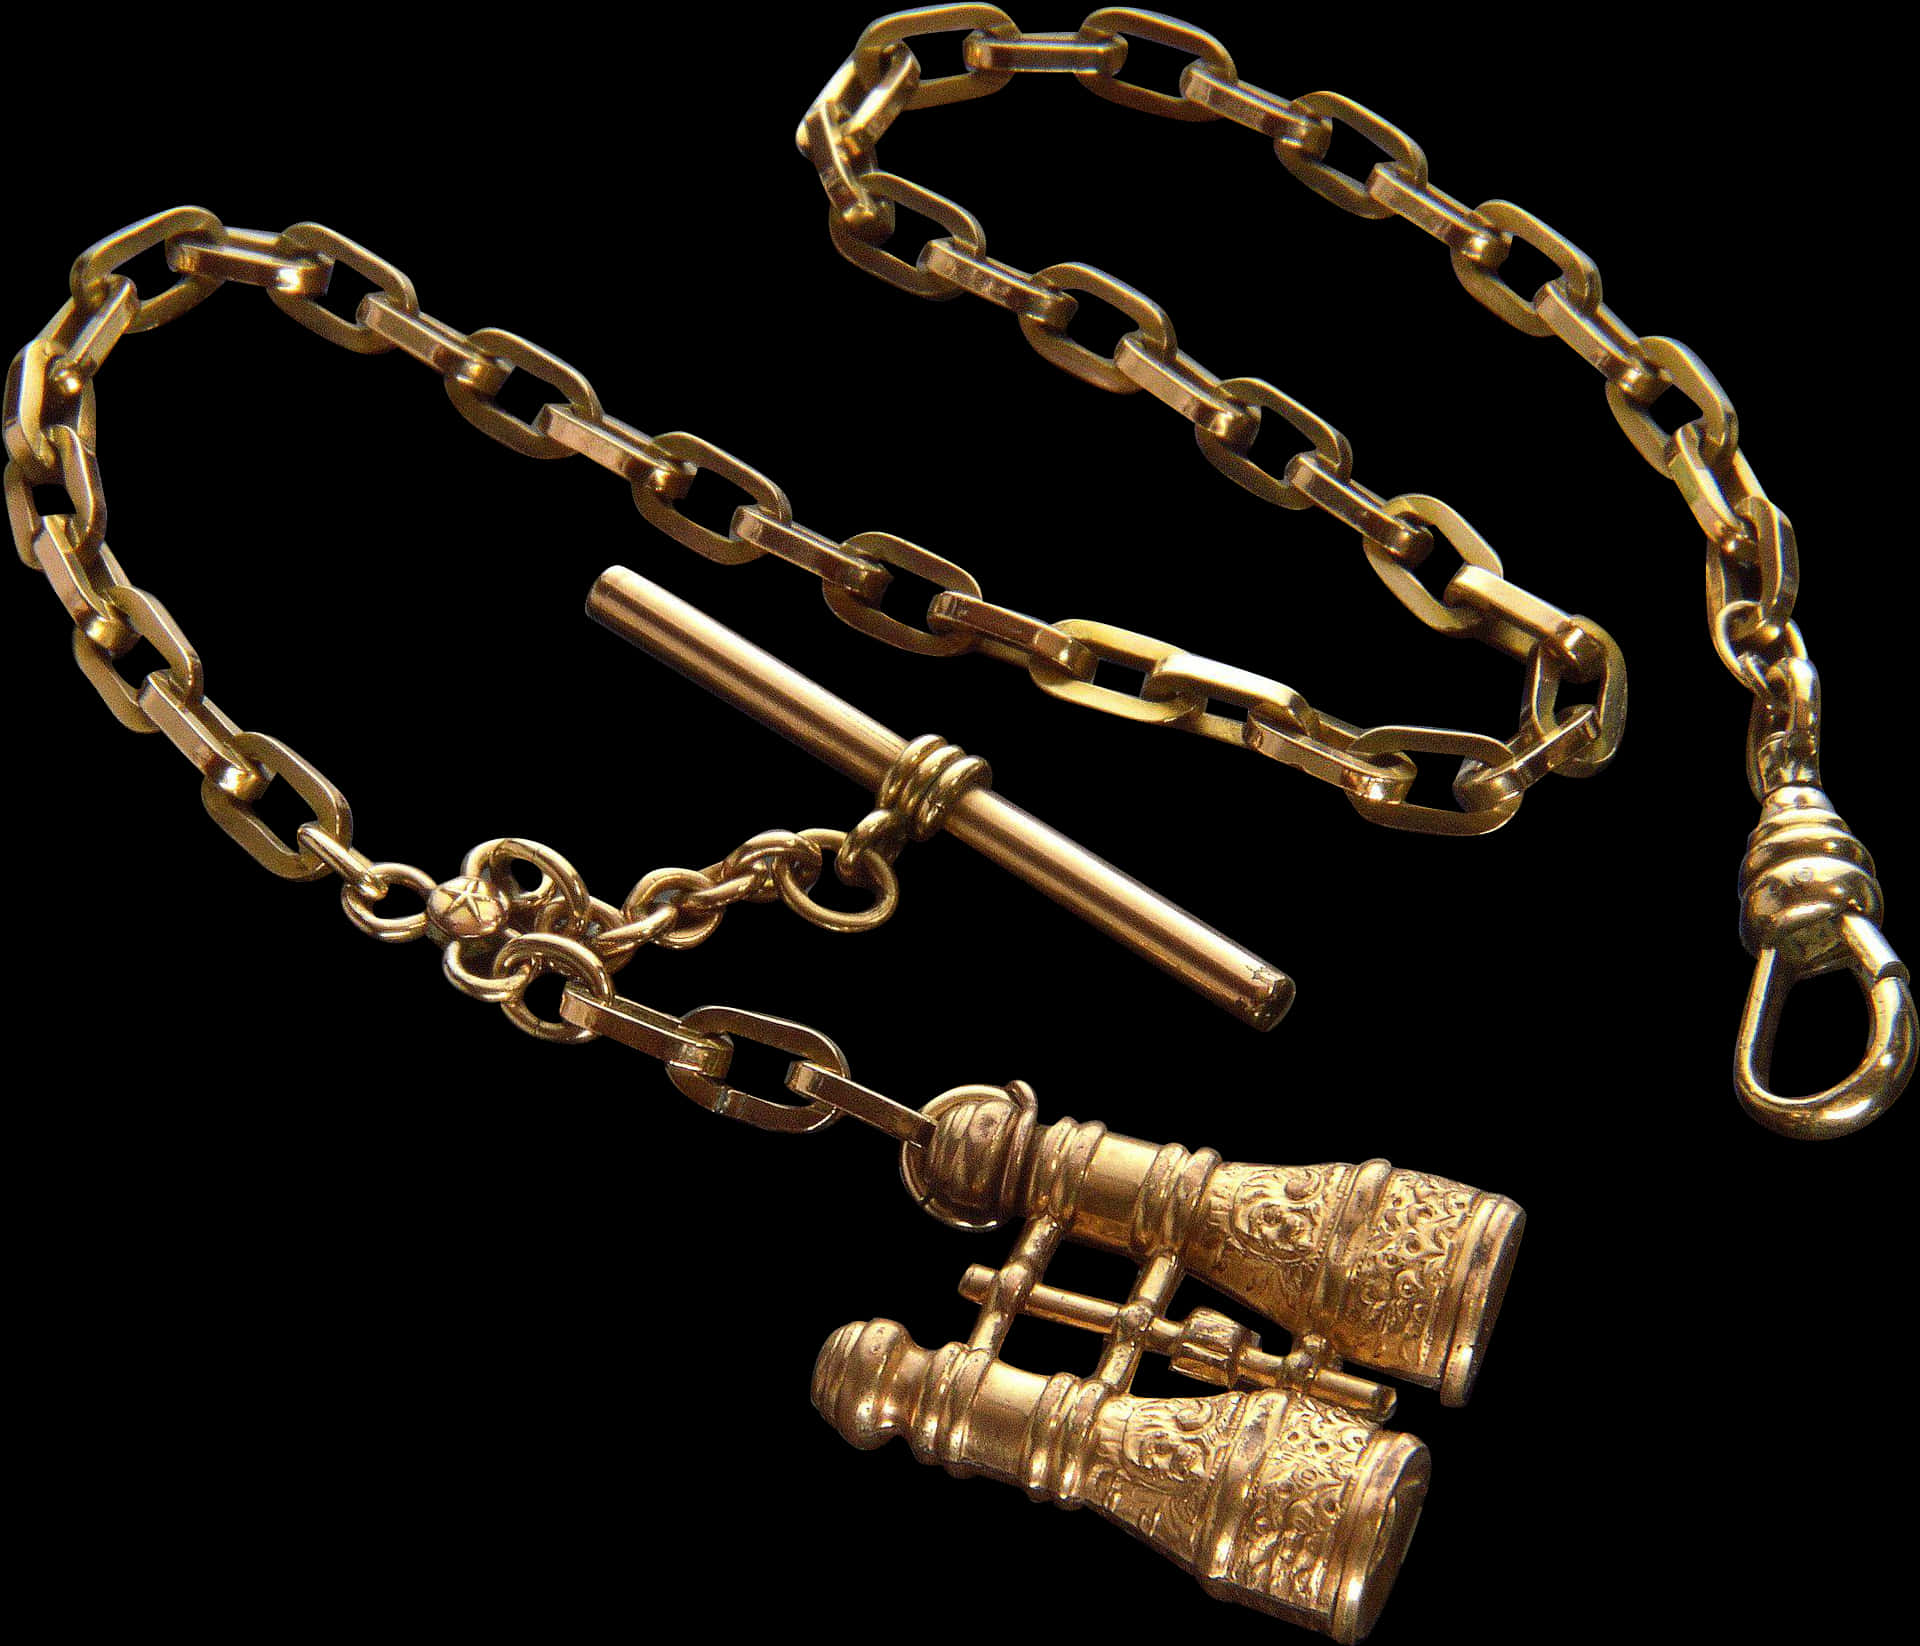 A Gold Chain And Binoculars